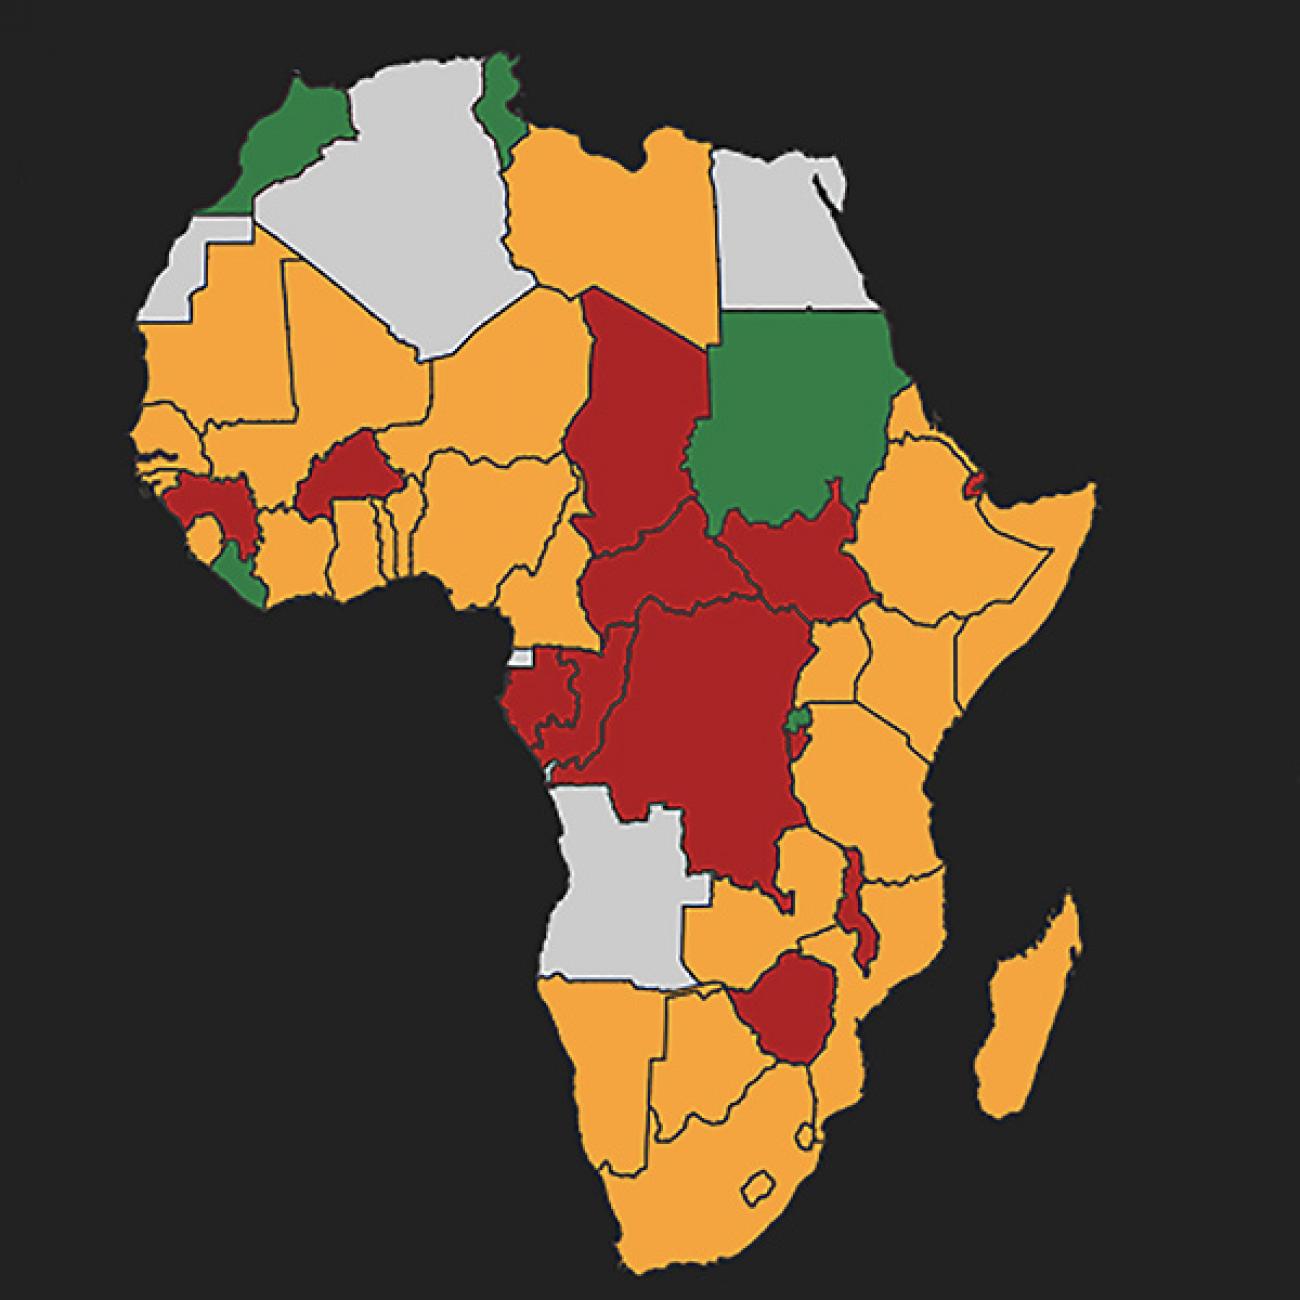 https://www.thinkglobalhealth.org/sites/default/files/styles/max_1300x1300_1_1/public/2020-02/CH.MB_.RK-CoV-Africa-2.26.20-1-Map-SQUARE.jpg?itok=zrZtO9zI